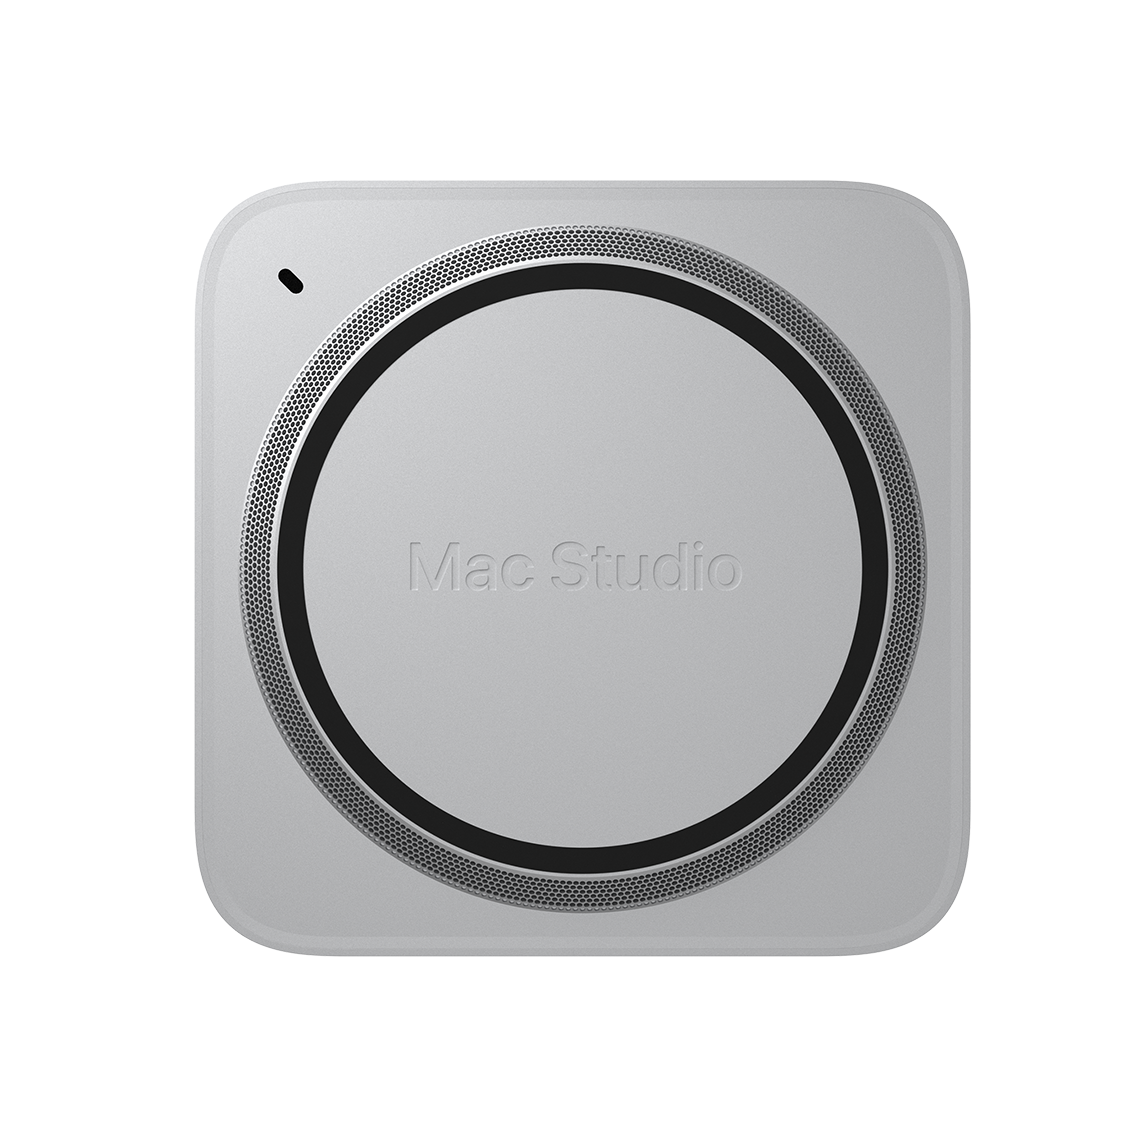 Mac Studio M1 Ultra (Parent Product)